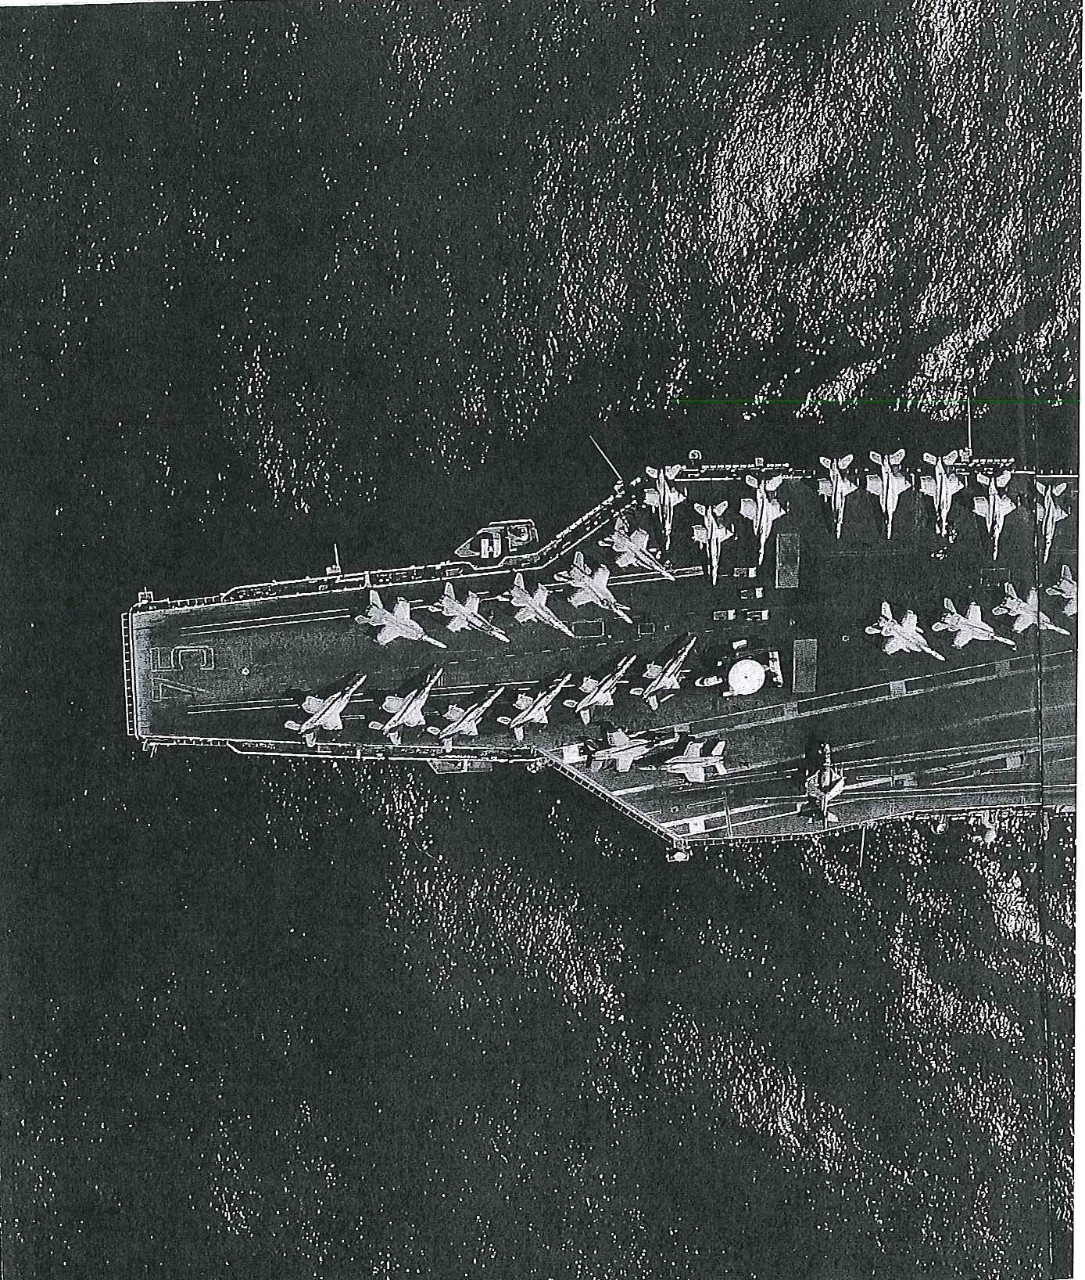 Photo of an Aircraft carrier